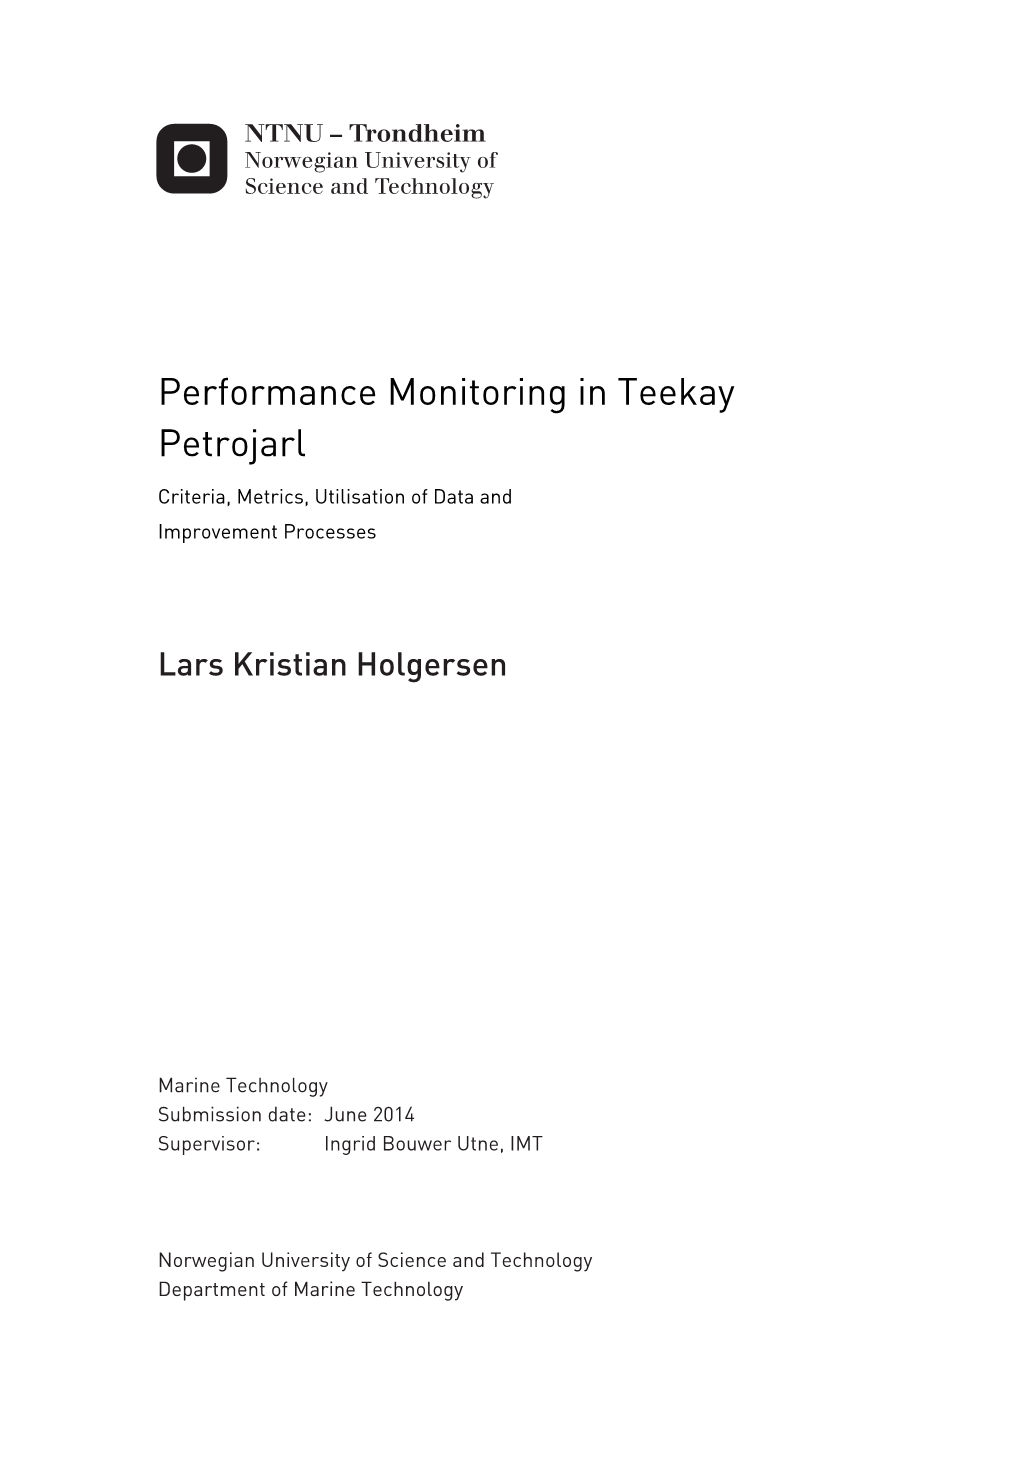 Performance Monitoring in Teekay Petrojarl